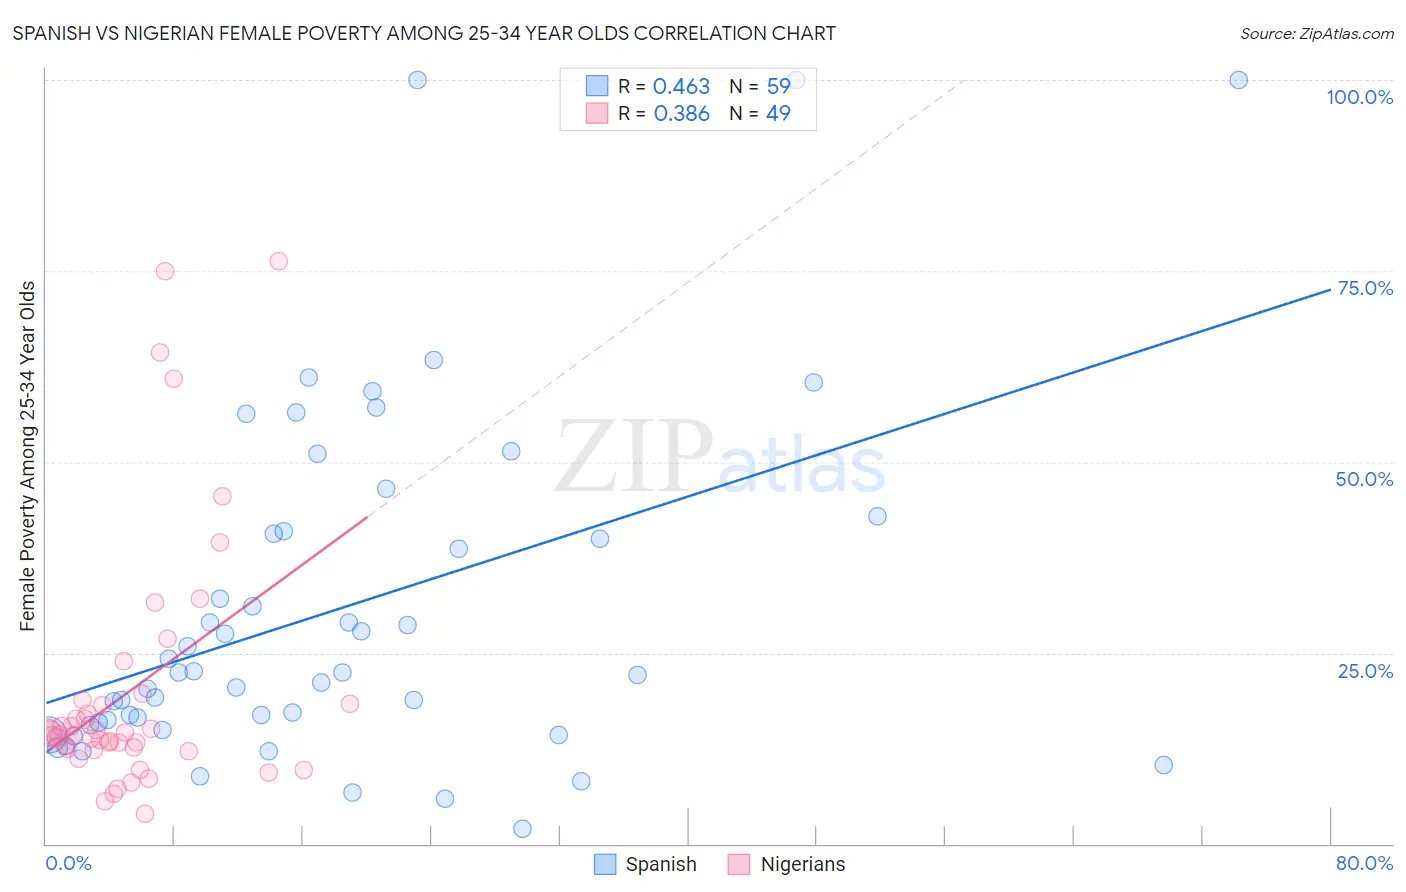 Spanish vs Nigerian Female Poverty Among 25-34 Year Olds